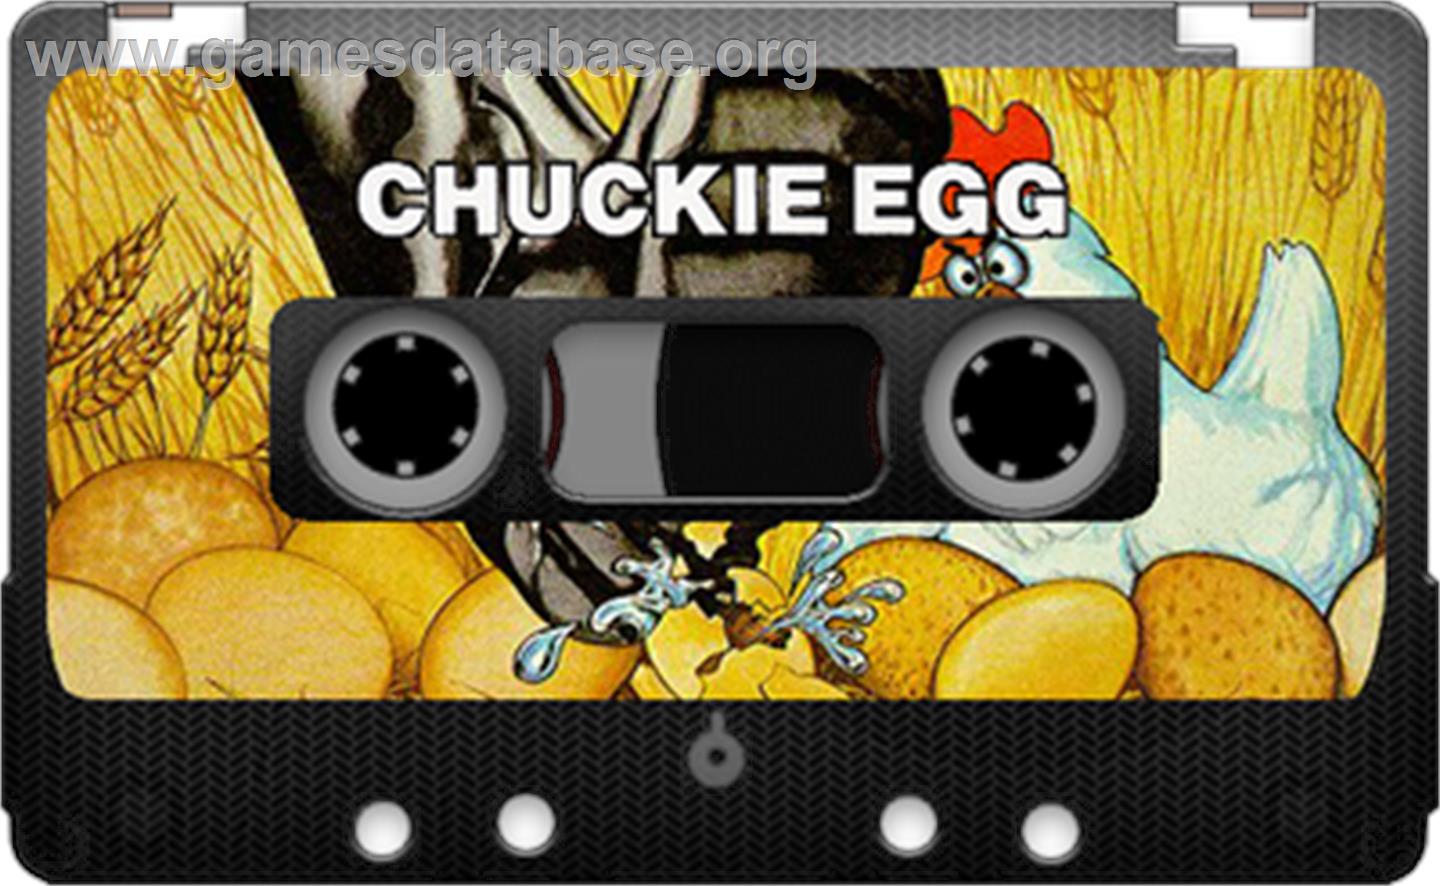 Chuckie Egg - Sinclair ZX Spectrum - Artwork - Cartridge